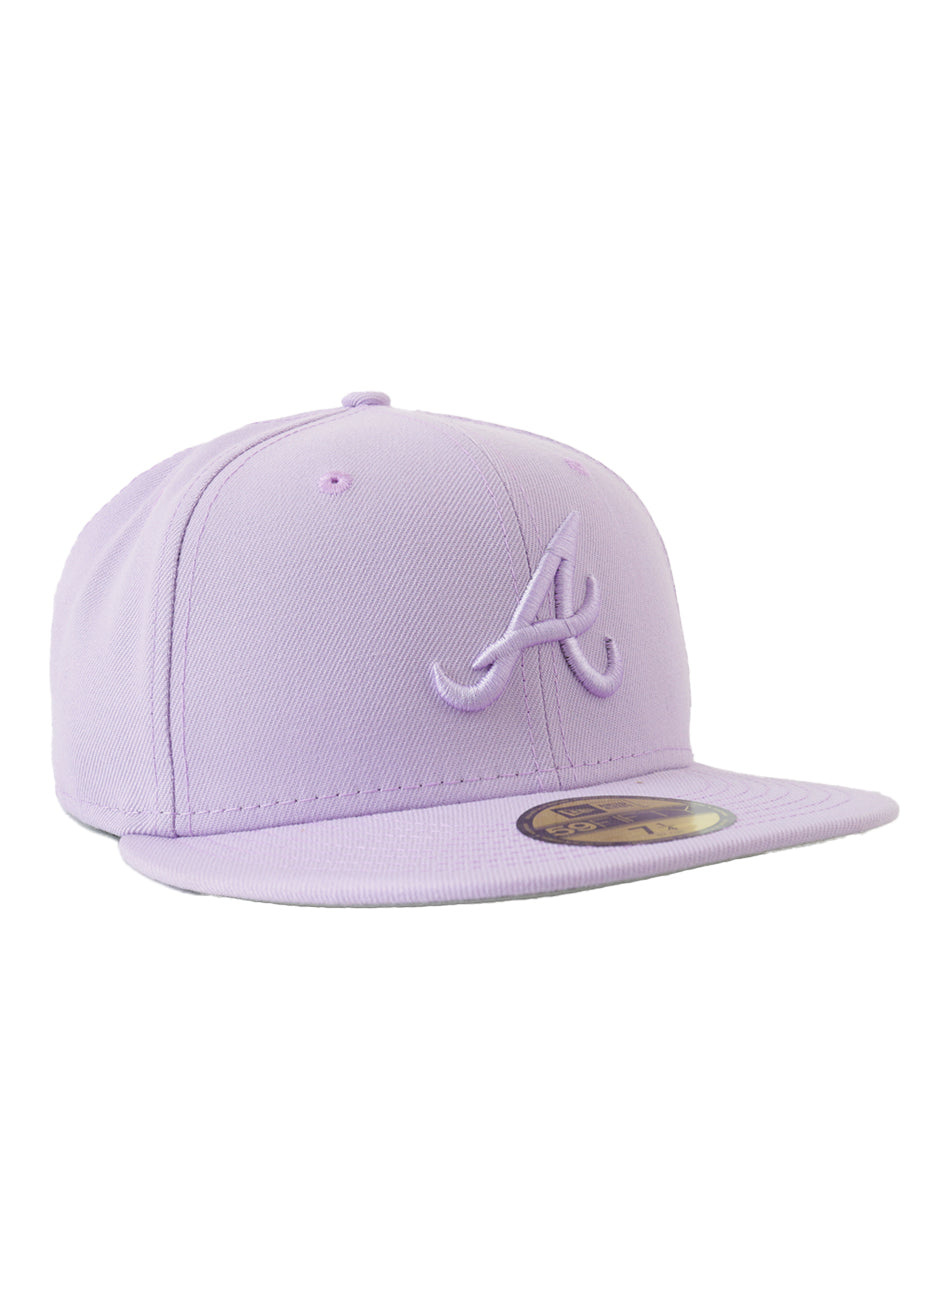 Atlanta Braves Color Pack 5950 Fitted Cap - Light Purple